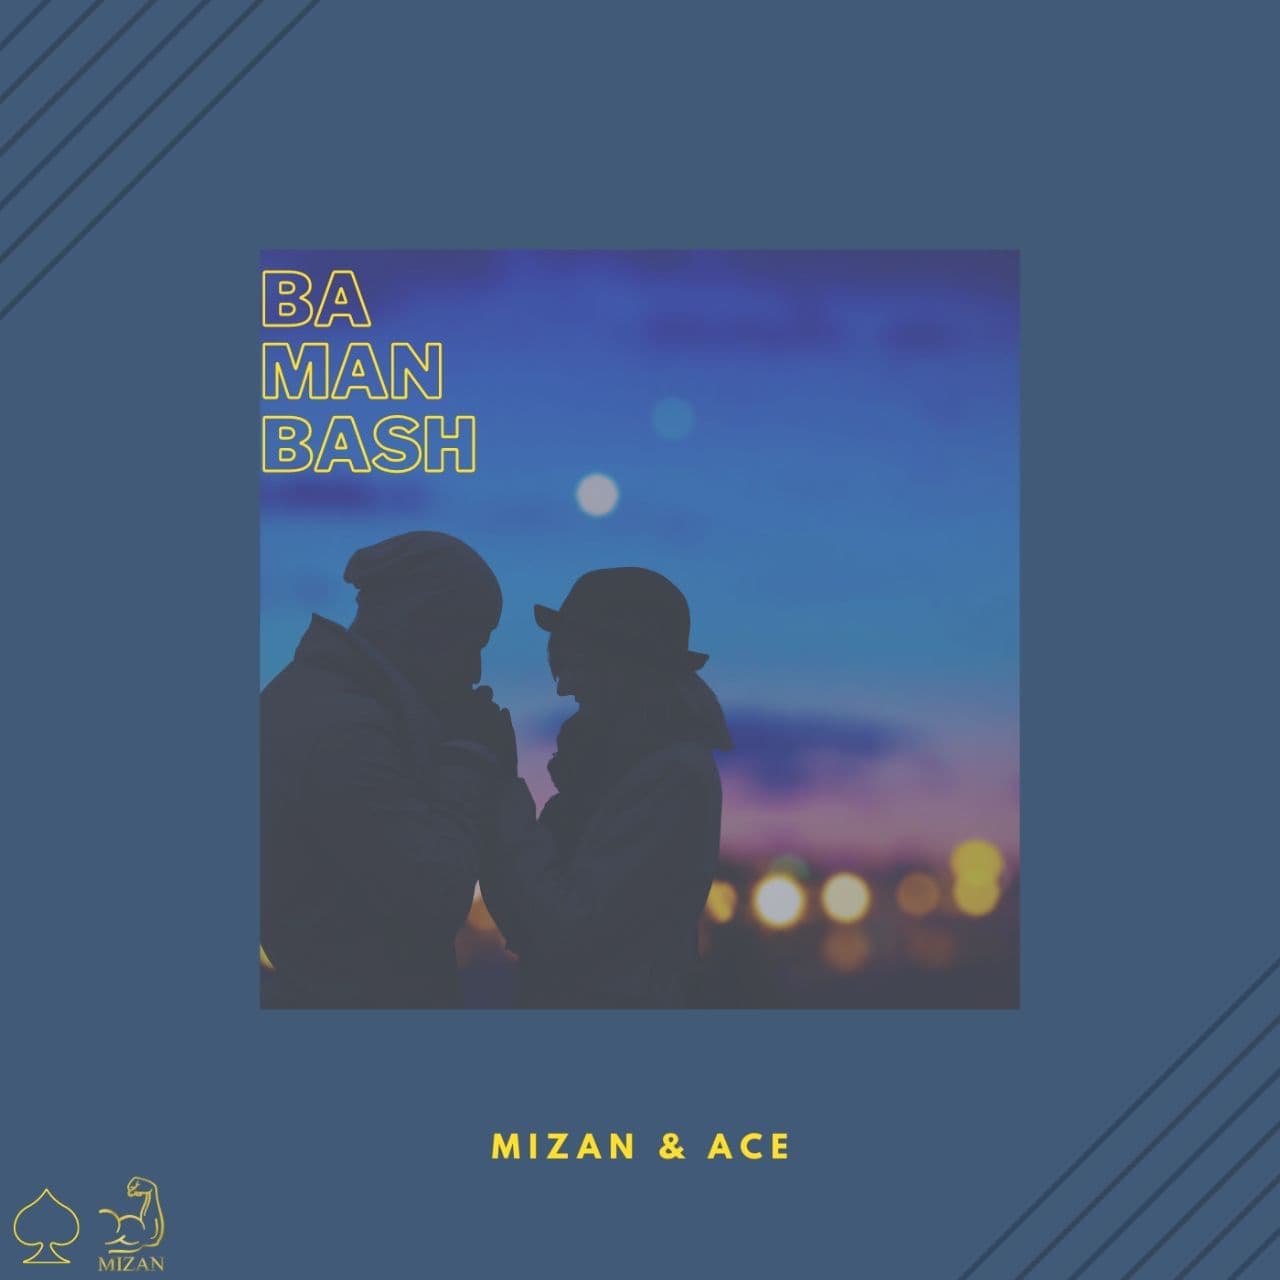 Mizan & Ace